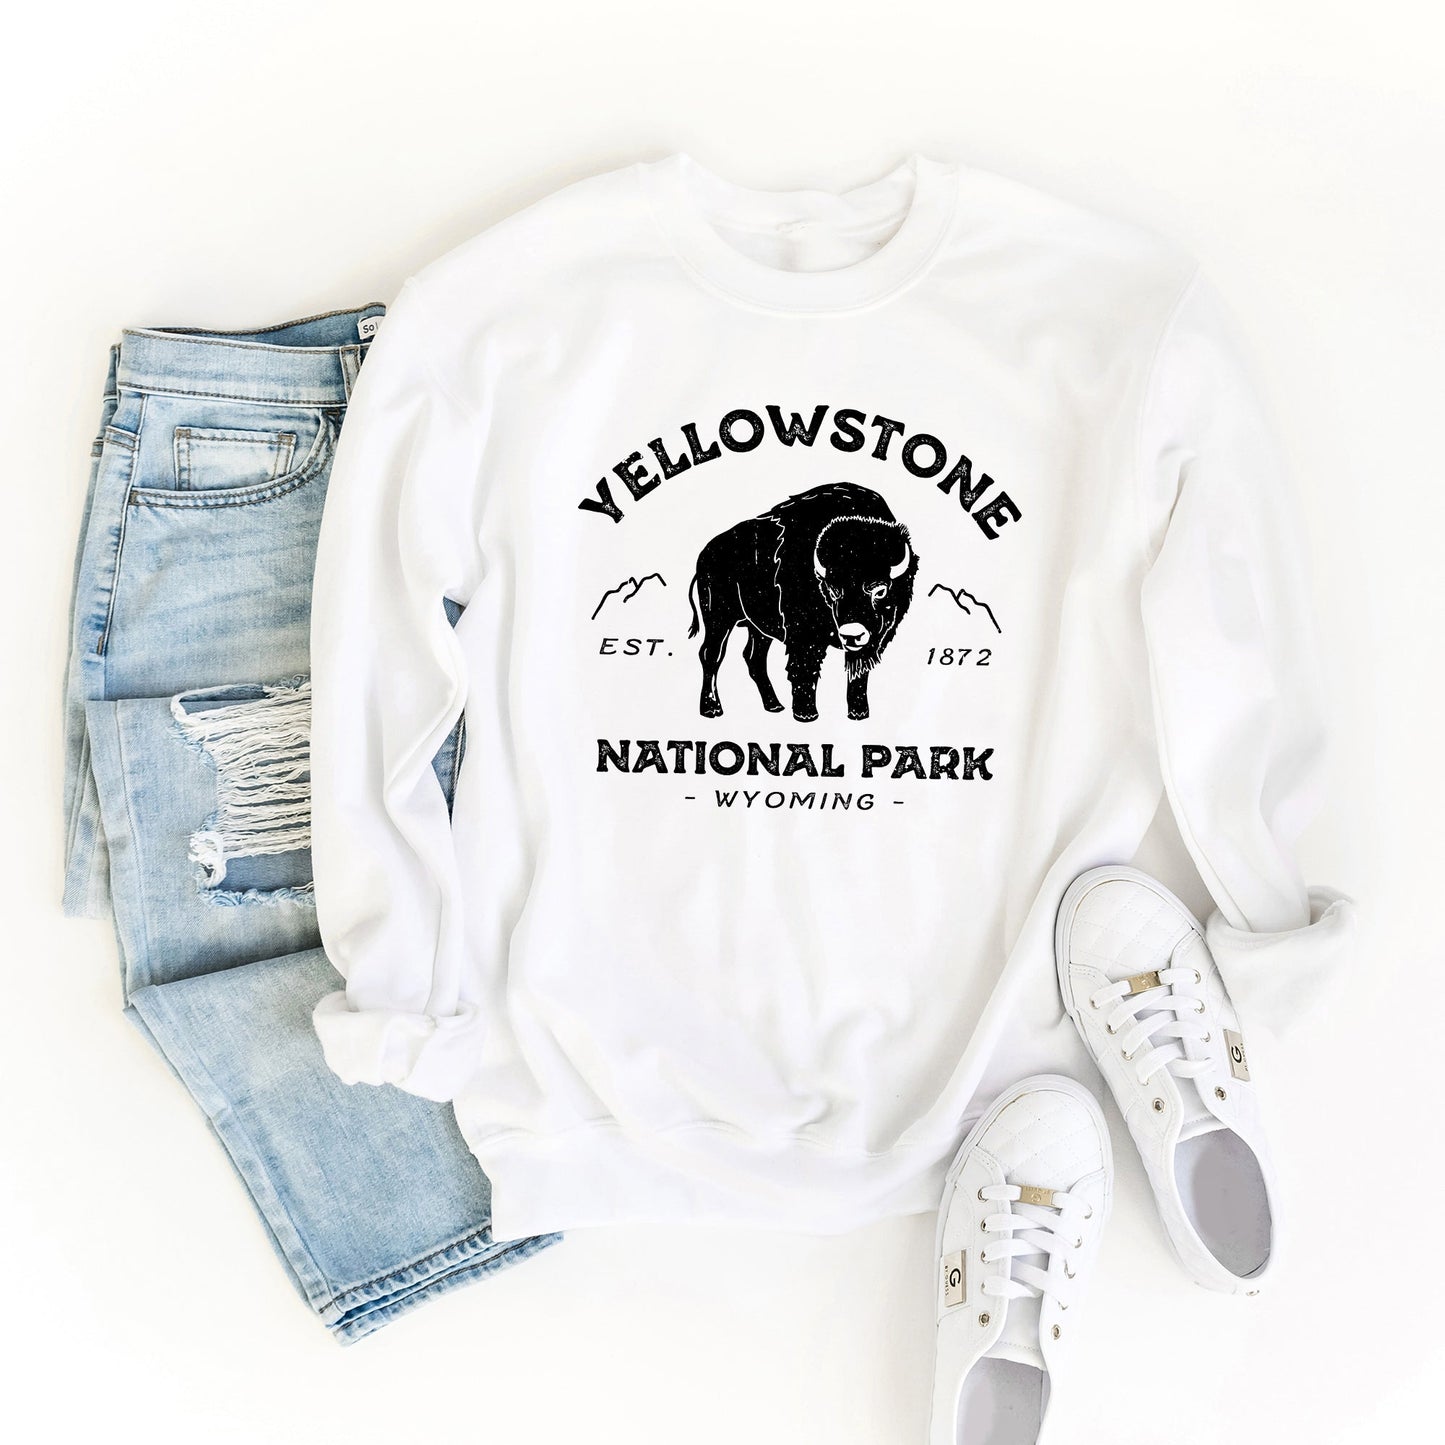 Clearance Vintage Yellowstone National Park | Sweatshirt